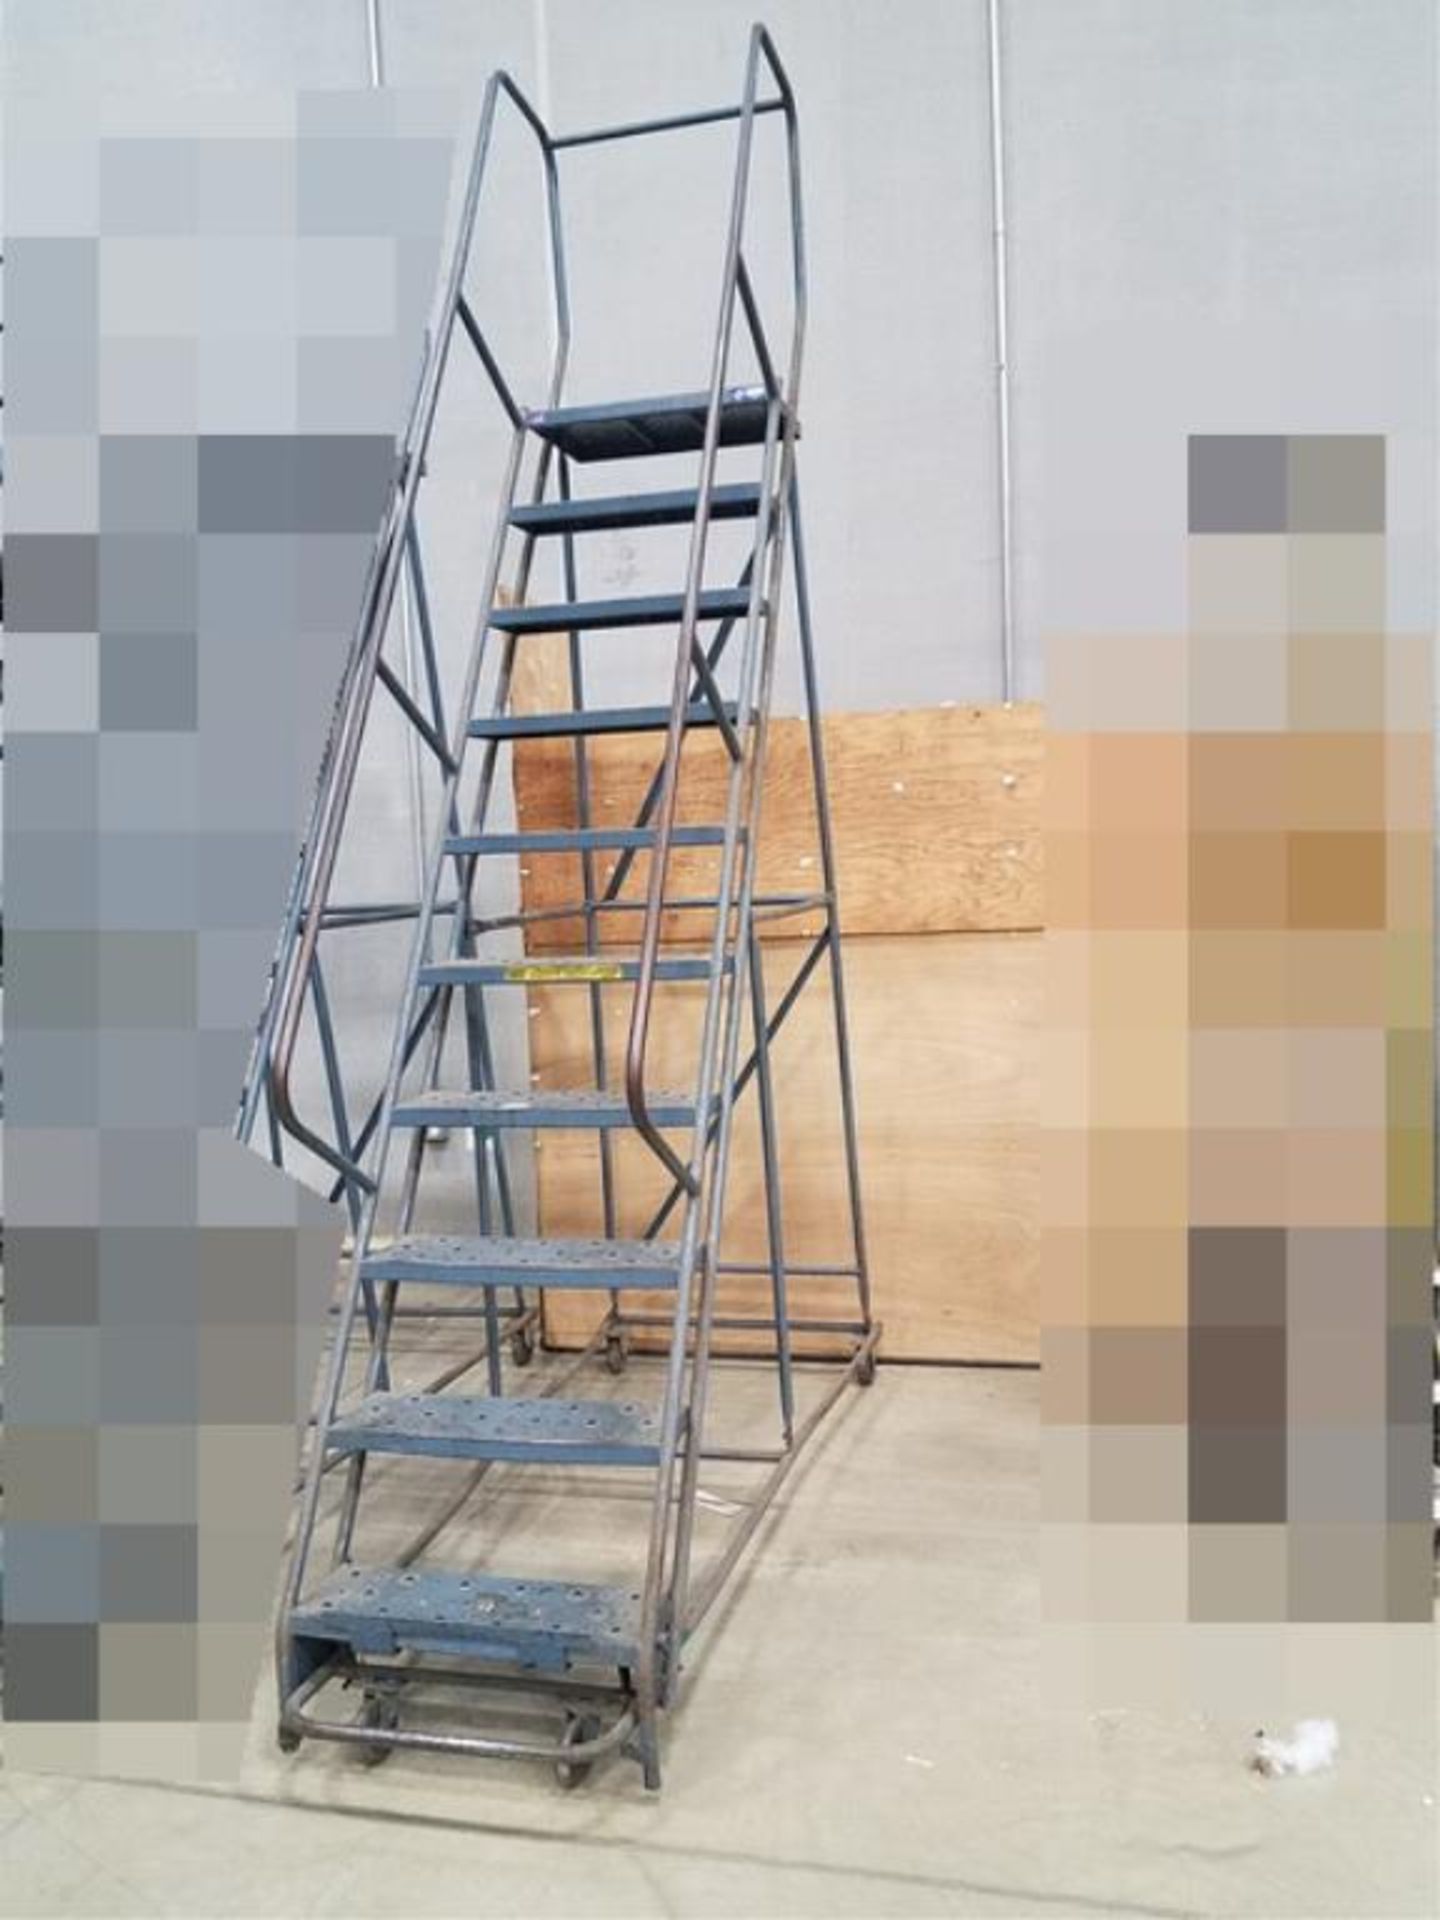 Mobile Warehouse Ladder